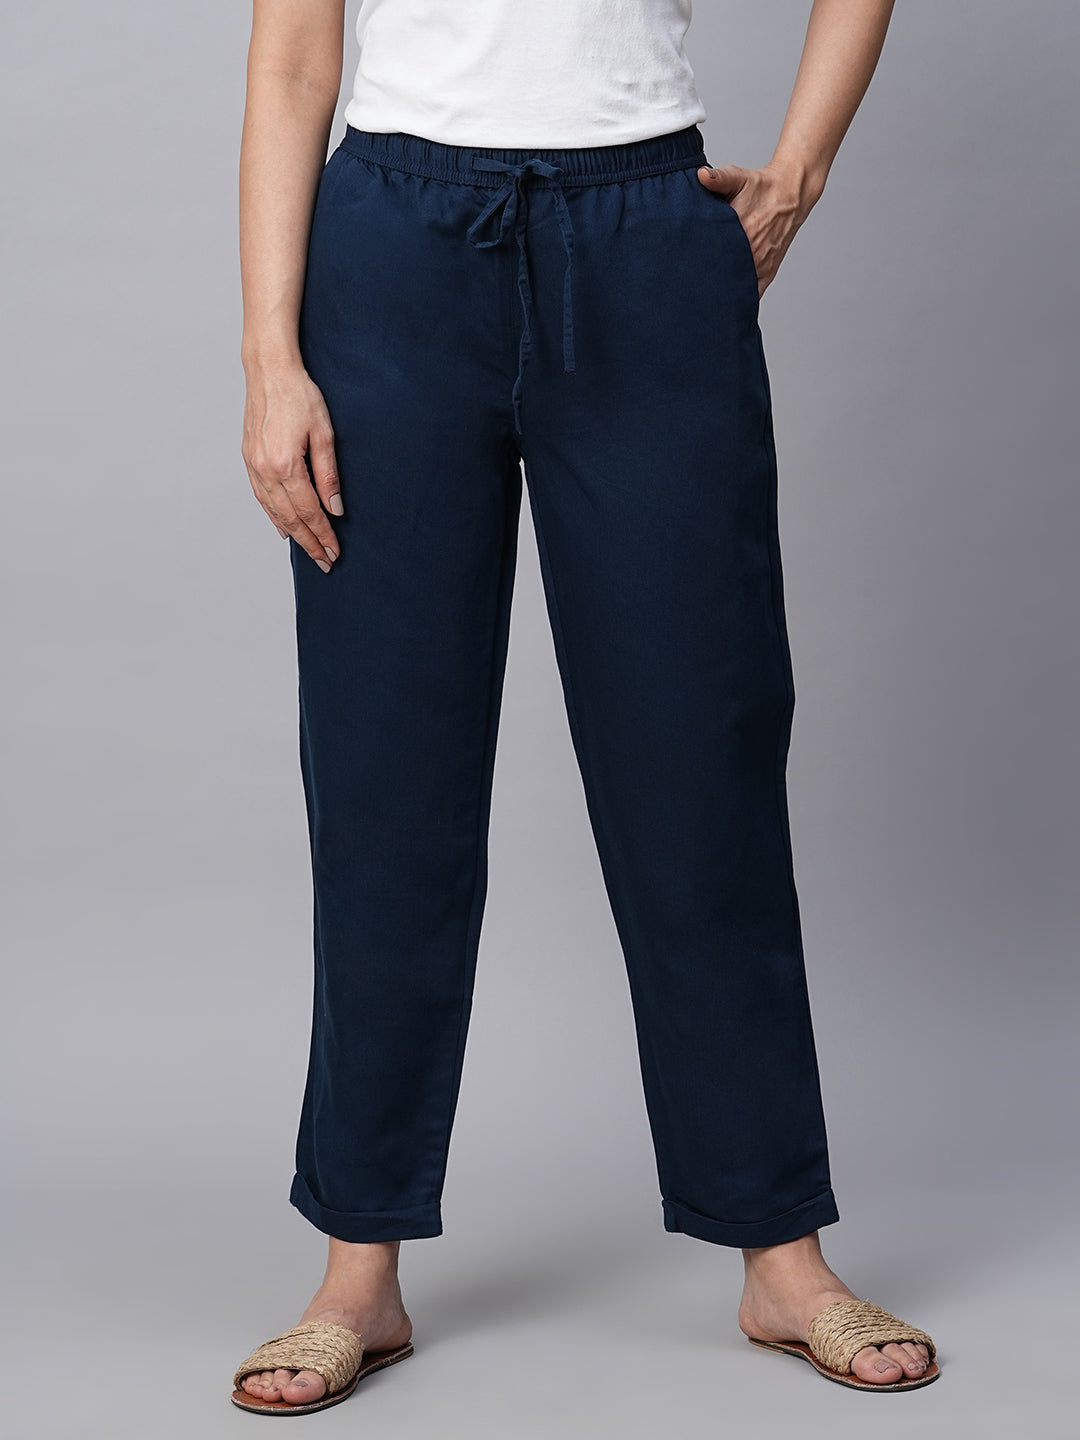 Slim Bottom Women Jeans at Rs 995/piece in Mumbai